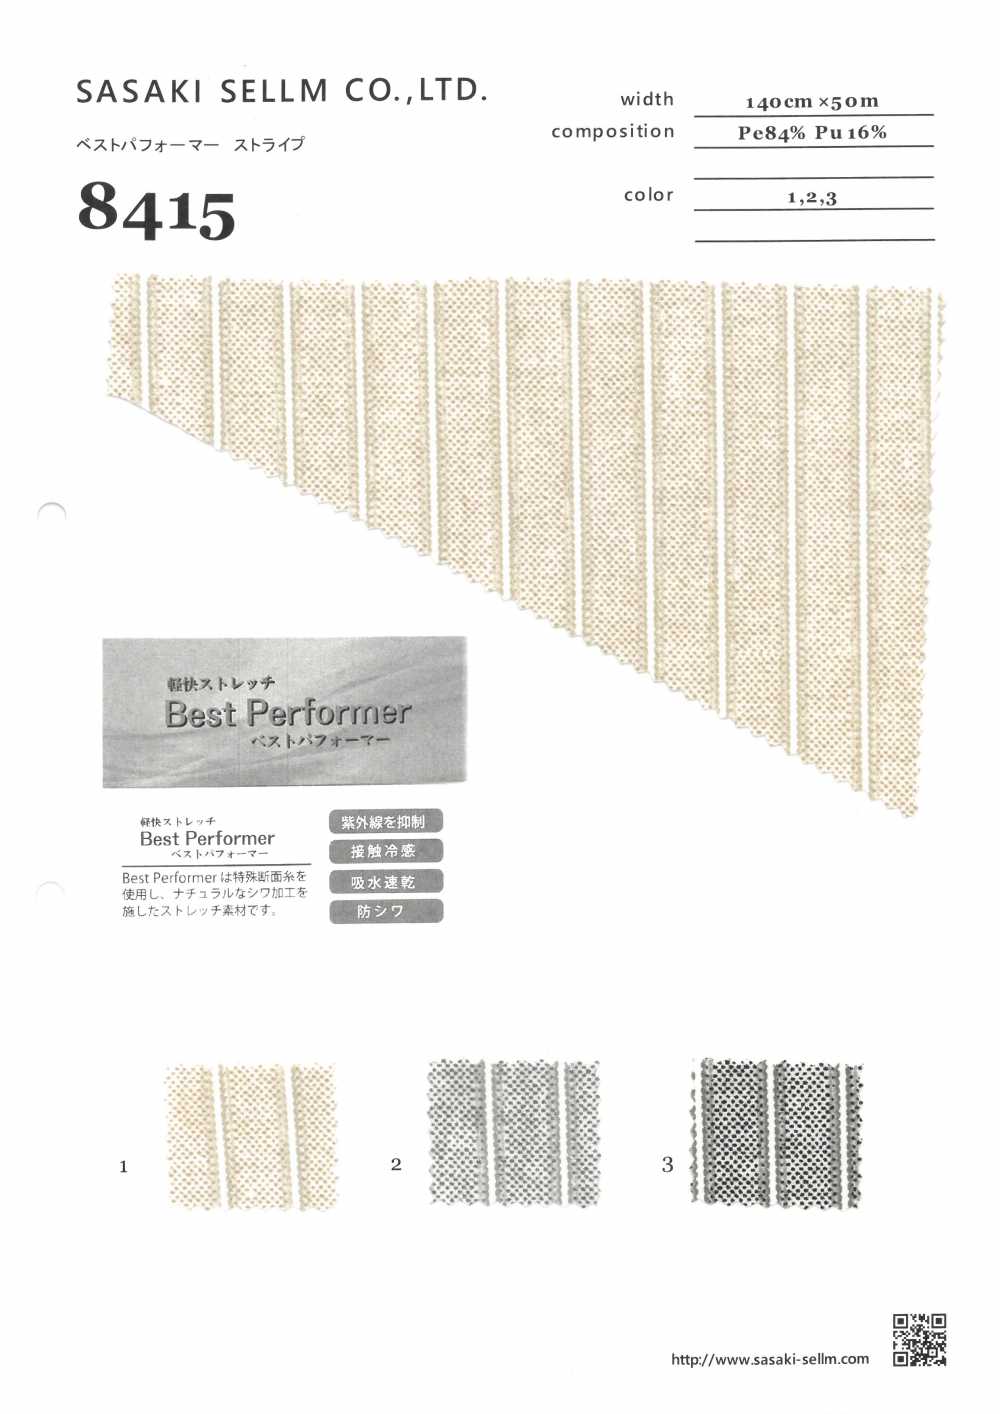 8415 Gilet Performer Stripe[Fabrication De Textile] SASAKISELLM